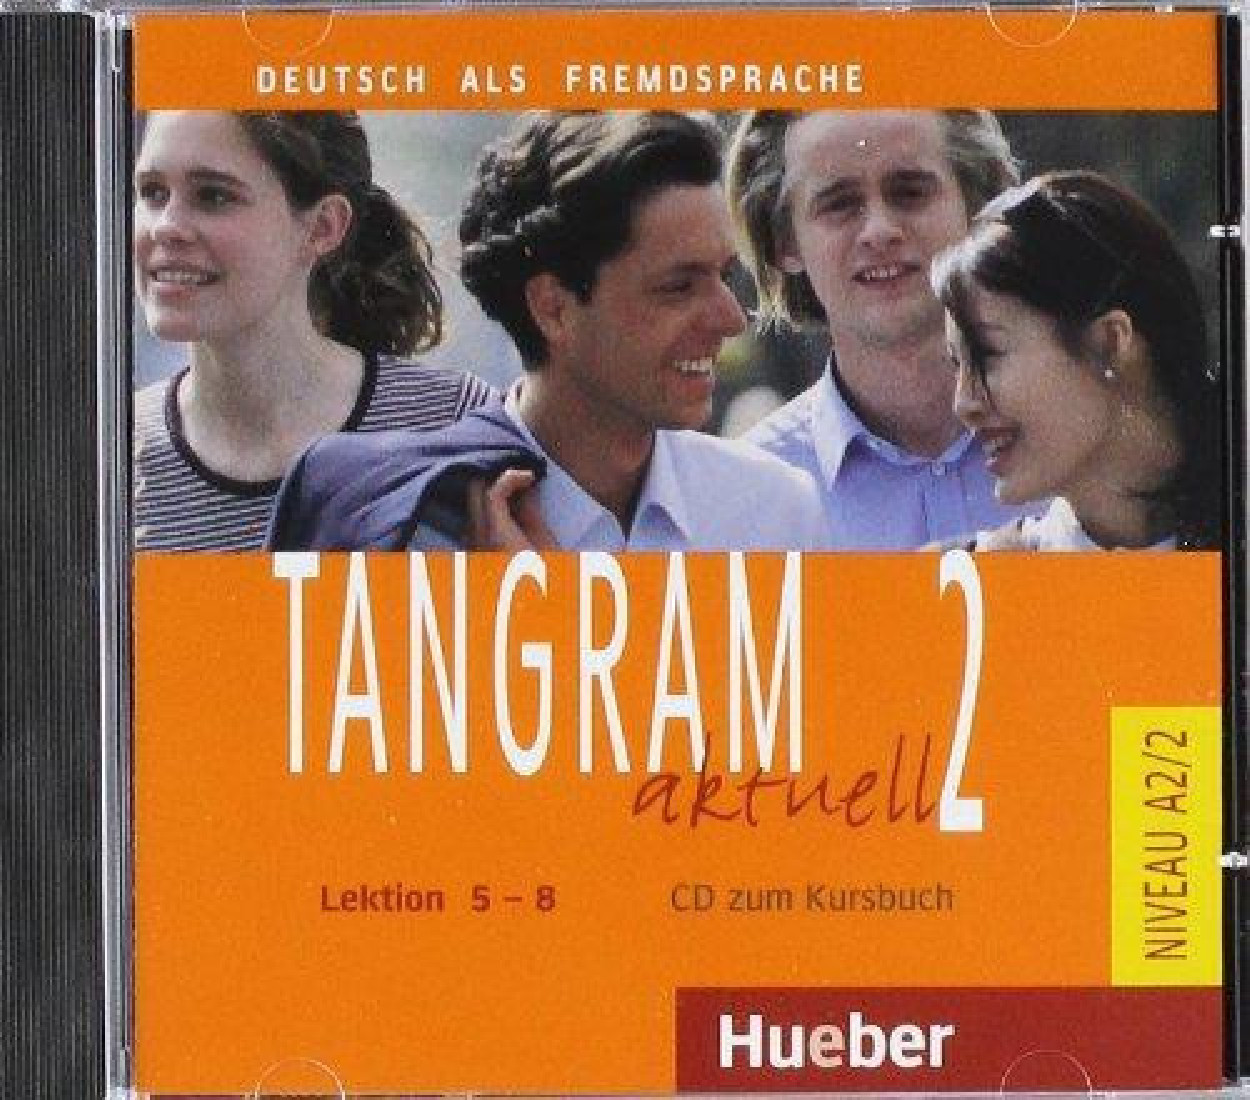 TANGRAM AKTUELL 2 LEKTION 5-8 CD (1)